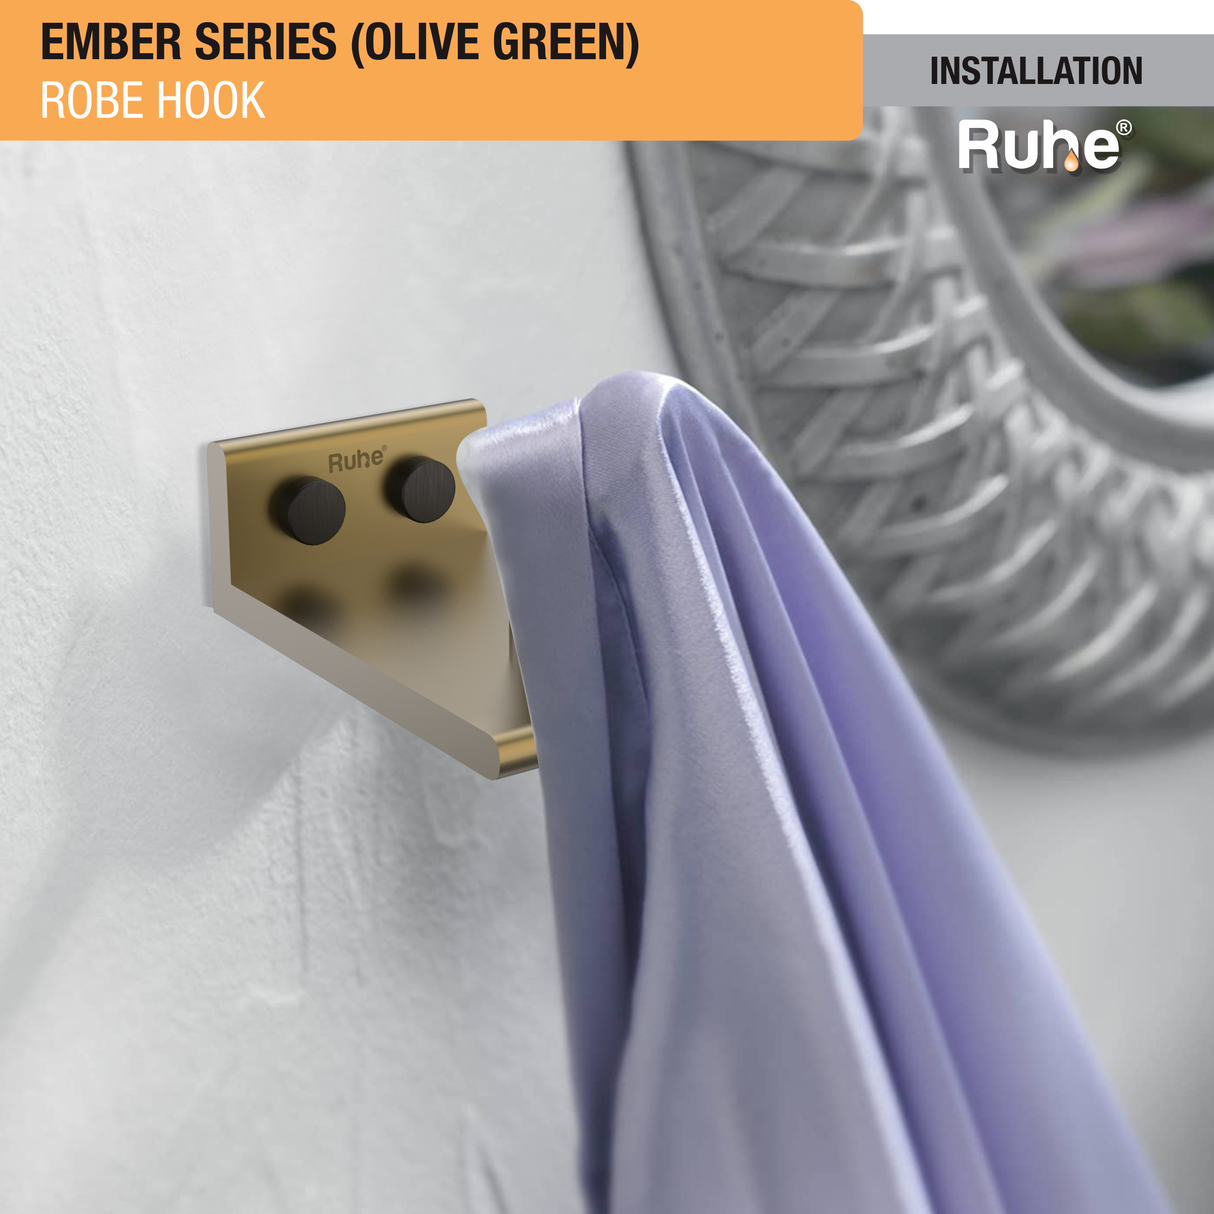 Ember Olive Green Robe Hook (Space Aluminium) installation